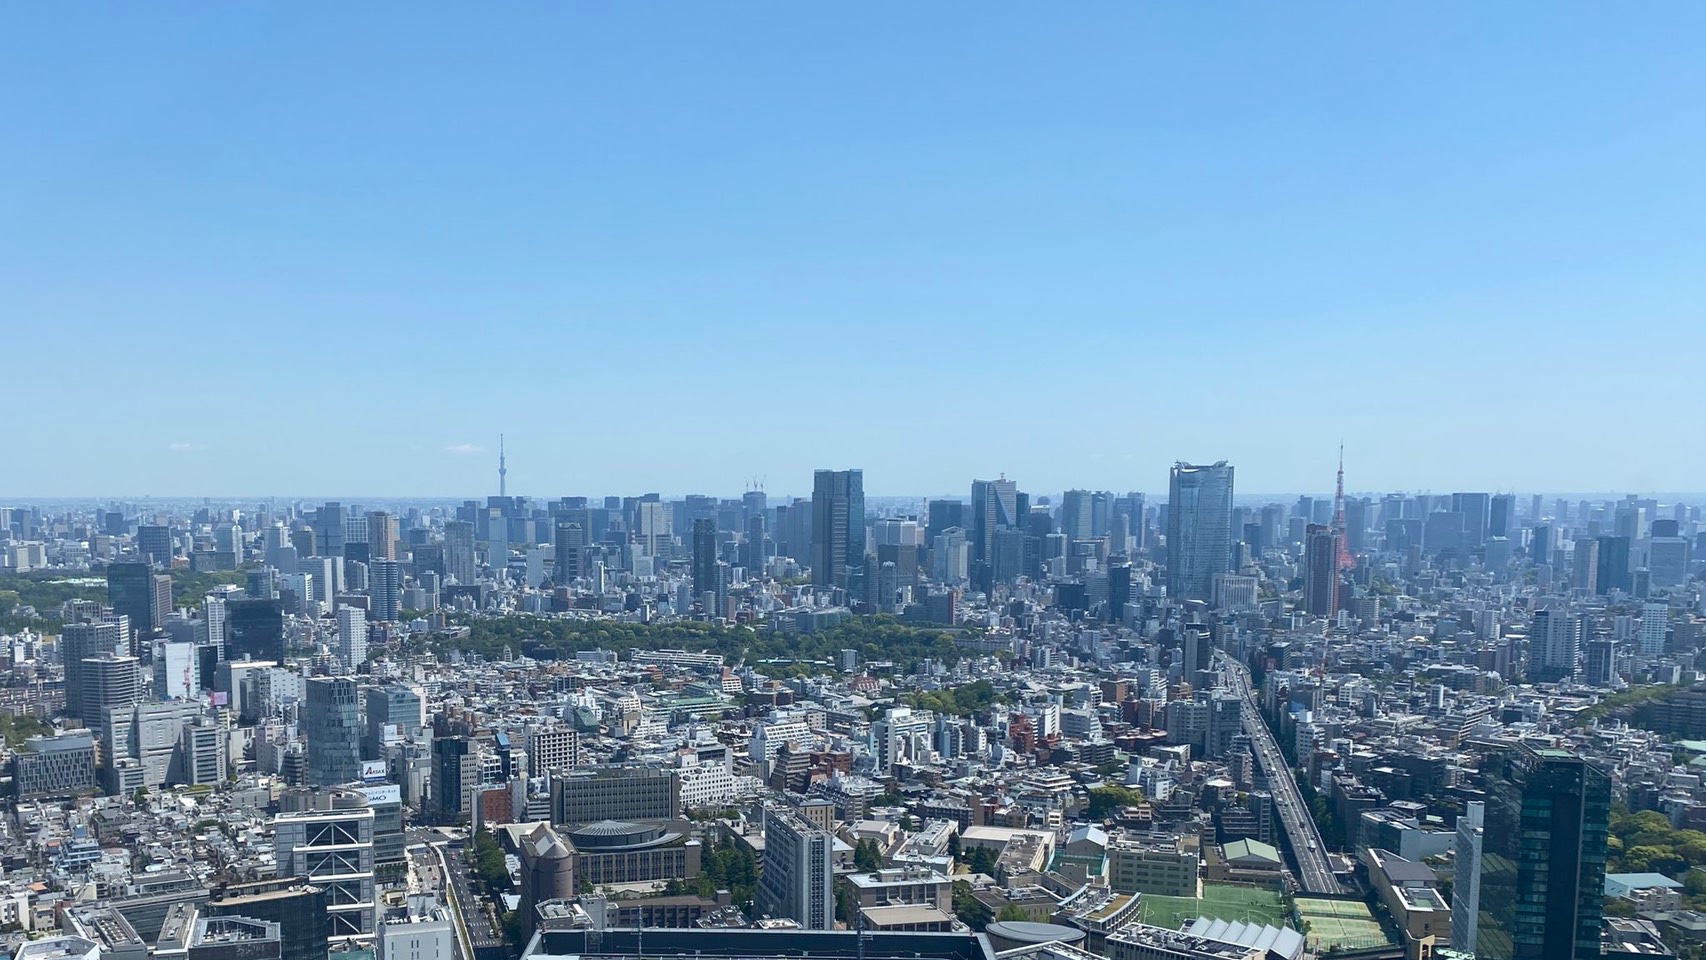 Shibuya Sky 渋谷スカイ 公式 En Twitter Panoramic View 渋谷スカイの屋上から見える360 の景色 各方角の景色をご紹介 今日は 東方面 東京駅 皇居 東京ミッドタウン 六本木ヒルズ方面です 東京スカイツリーと東京タワーを一緒に見られるのは